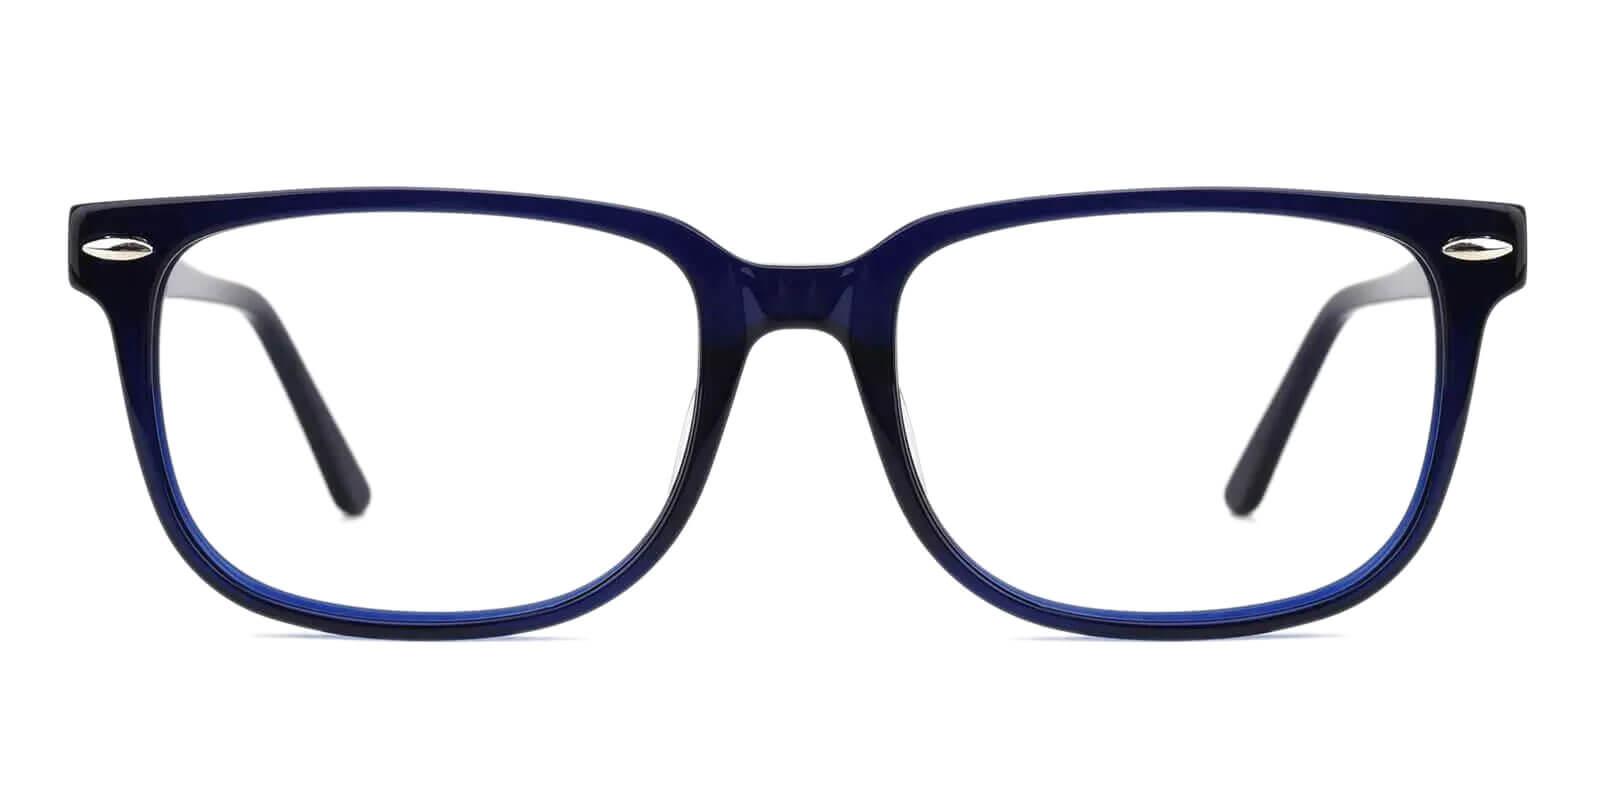 Christy Blue Acetate Eyeglasses , SpringHinges , UniversalBridgeFit Frames from ABBE Glasses